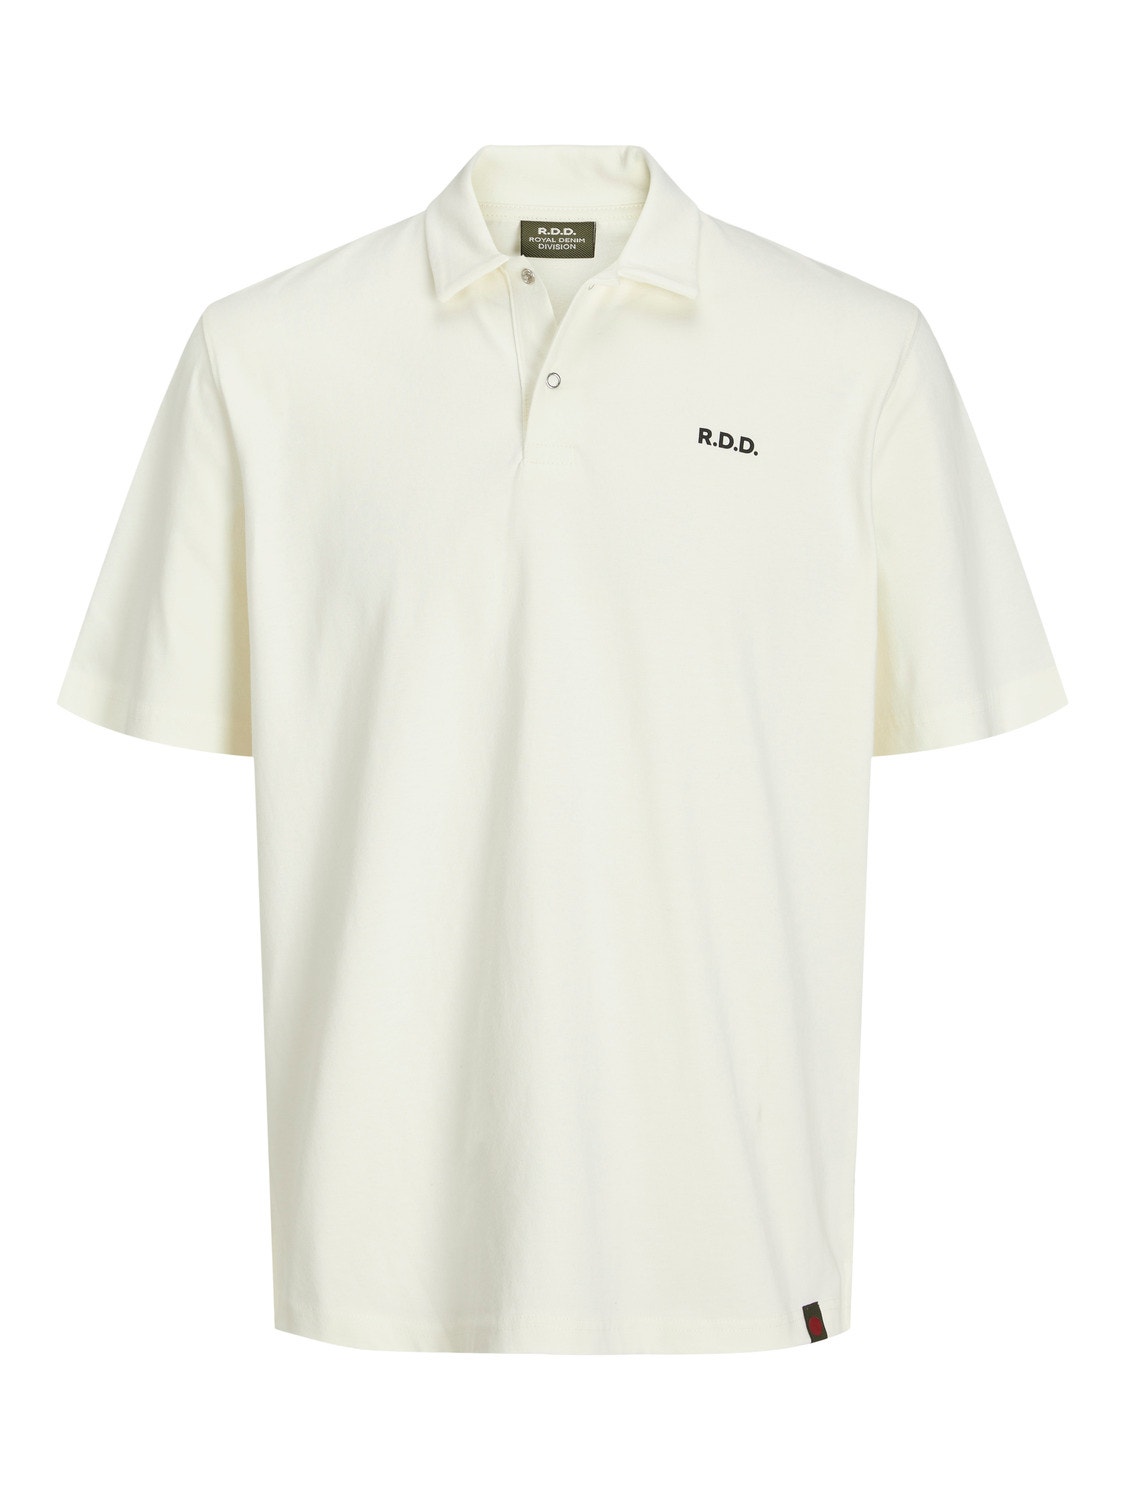 Jack & Jones RDD Z logo Polo T-shirt -Egret - 12232814